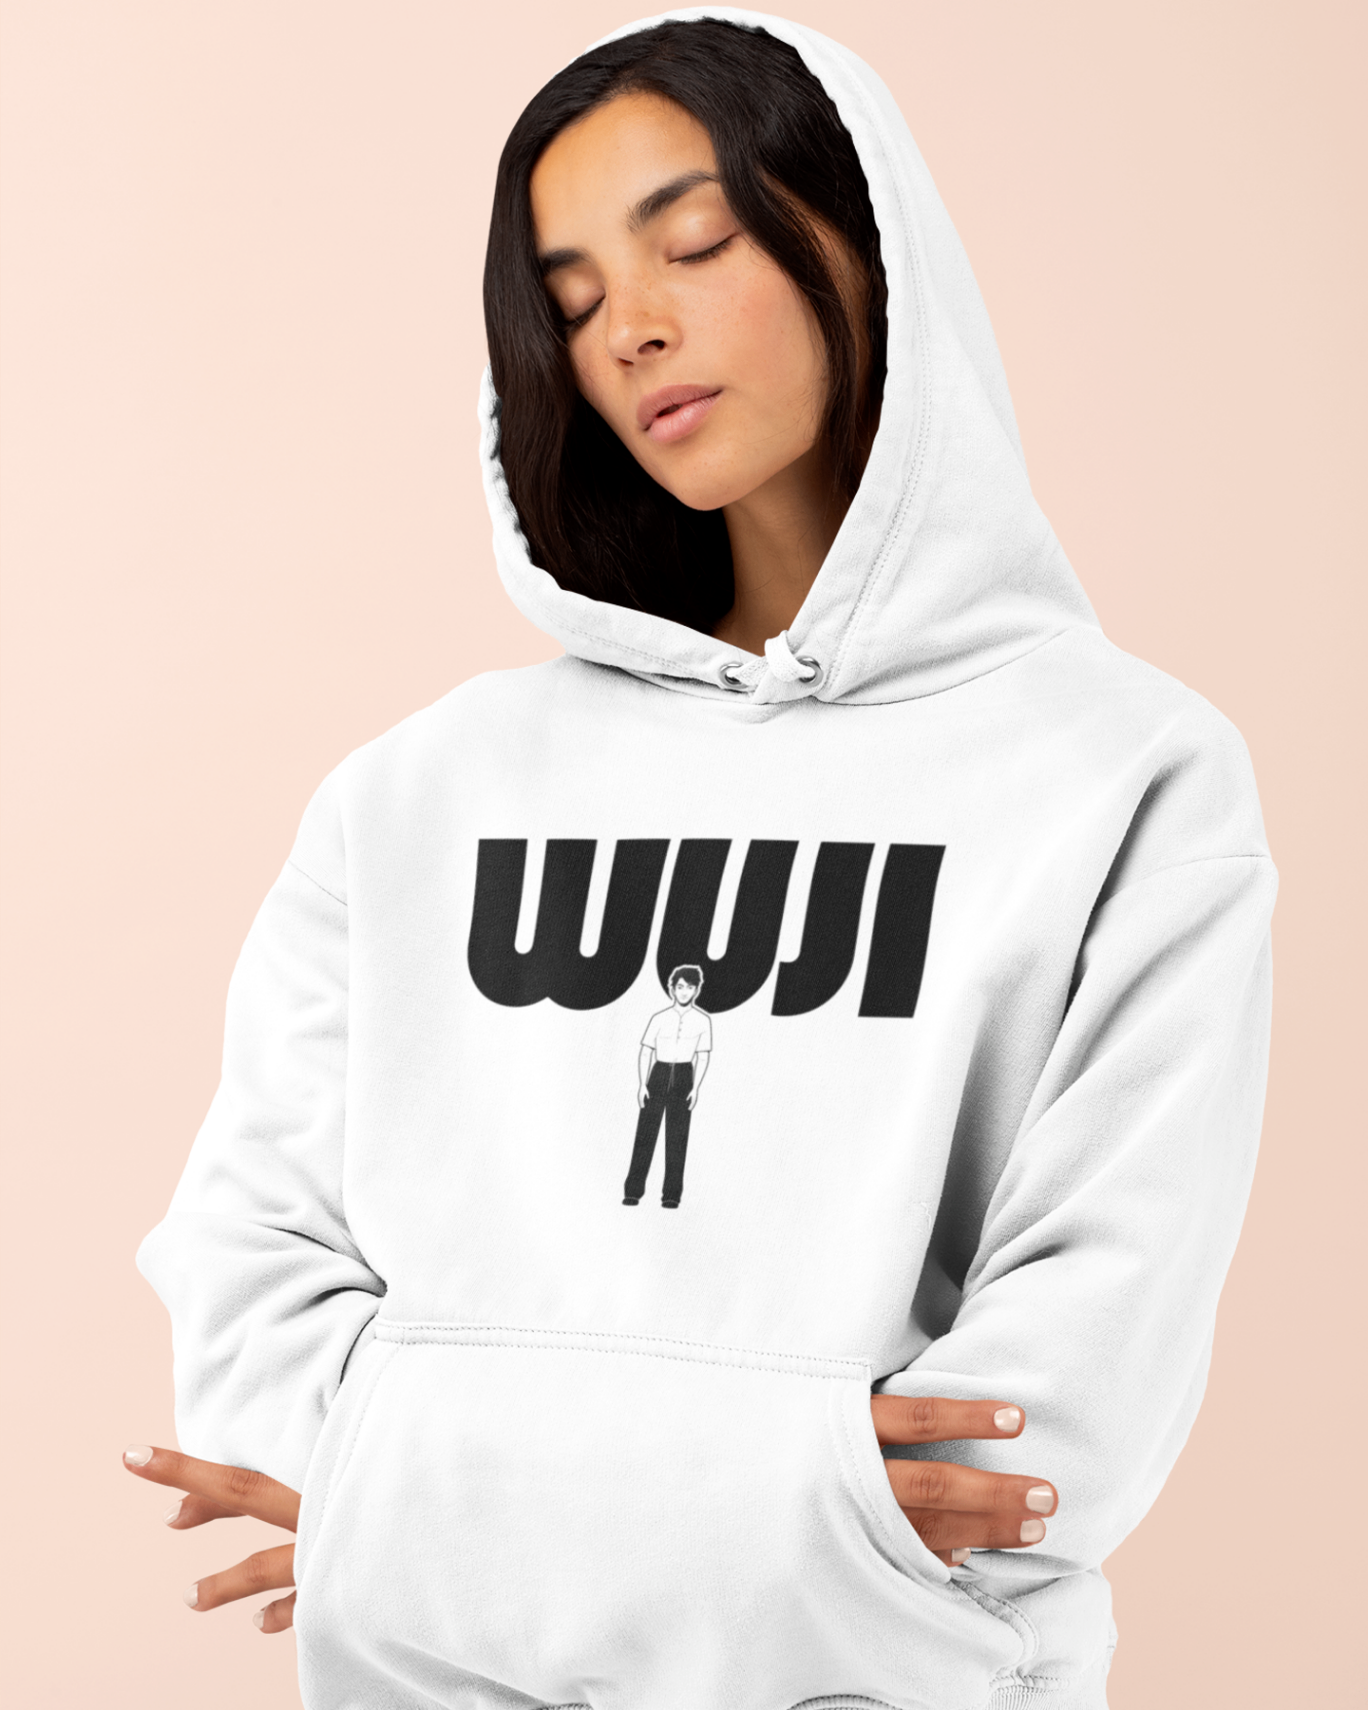 Women's "WUJI" hoodie